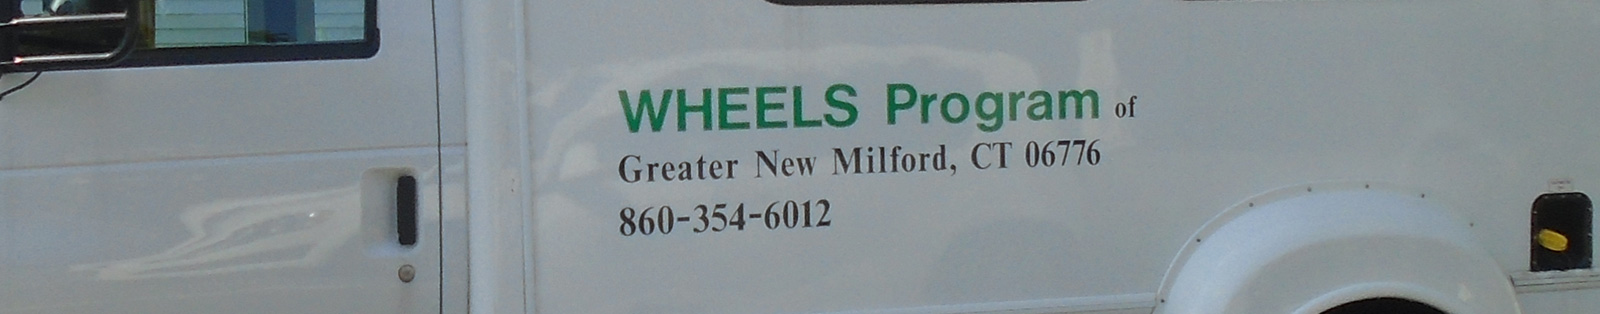 New Milford Wheels Program